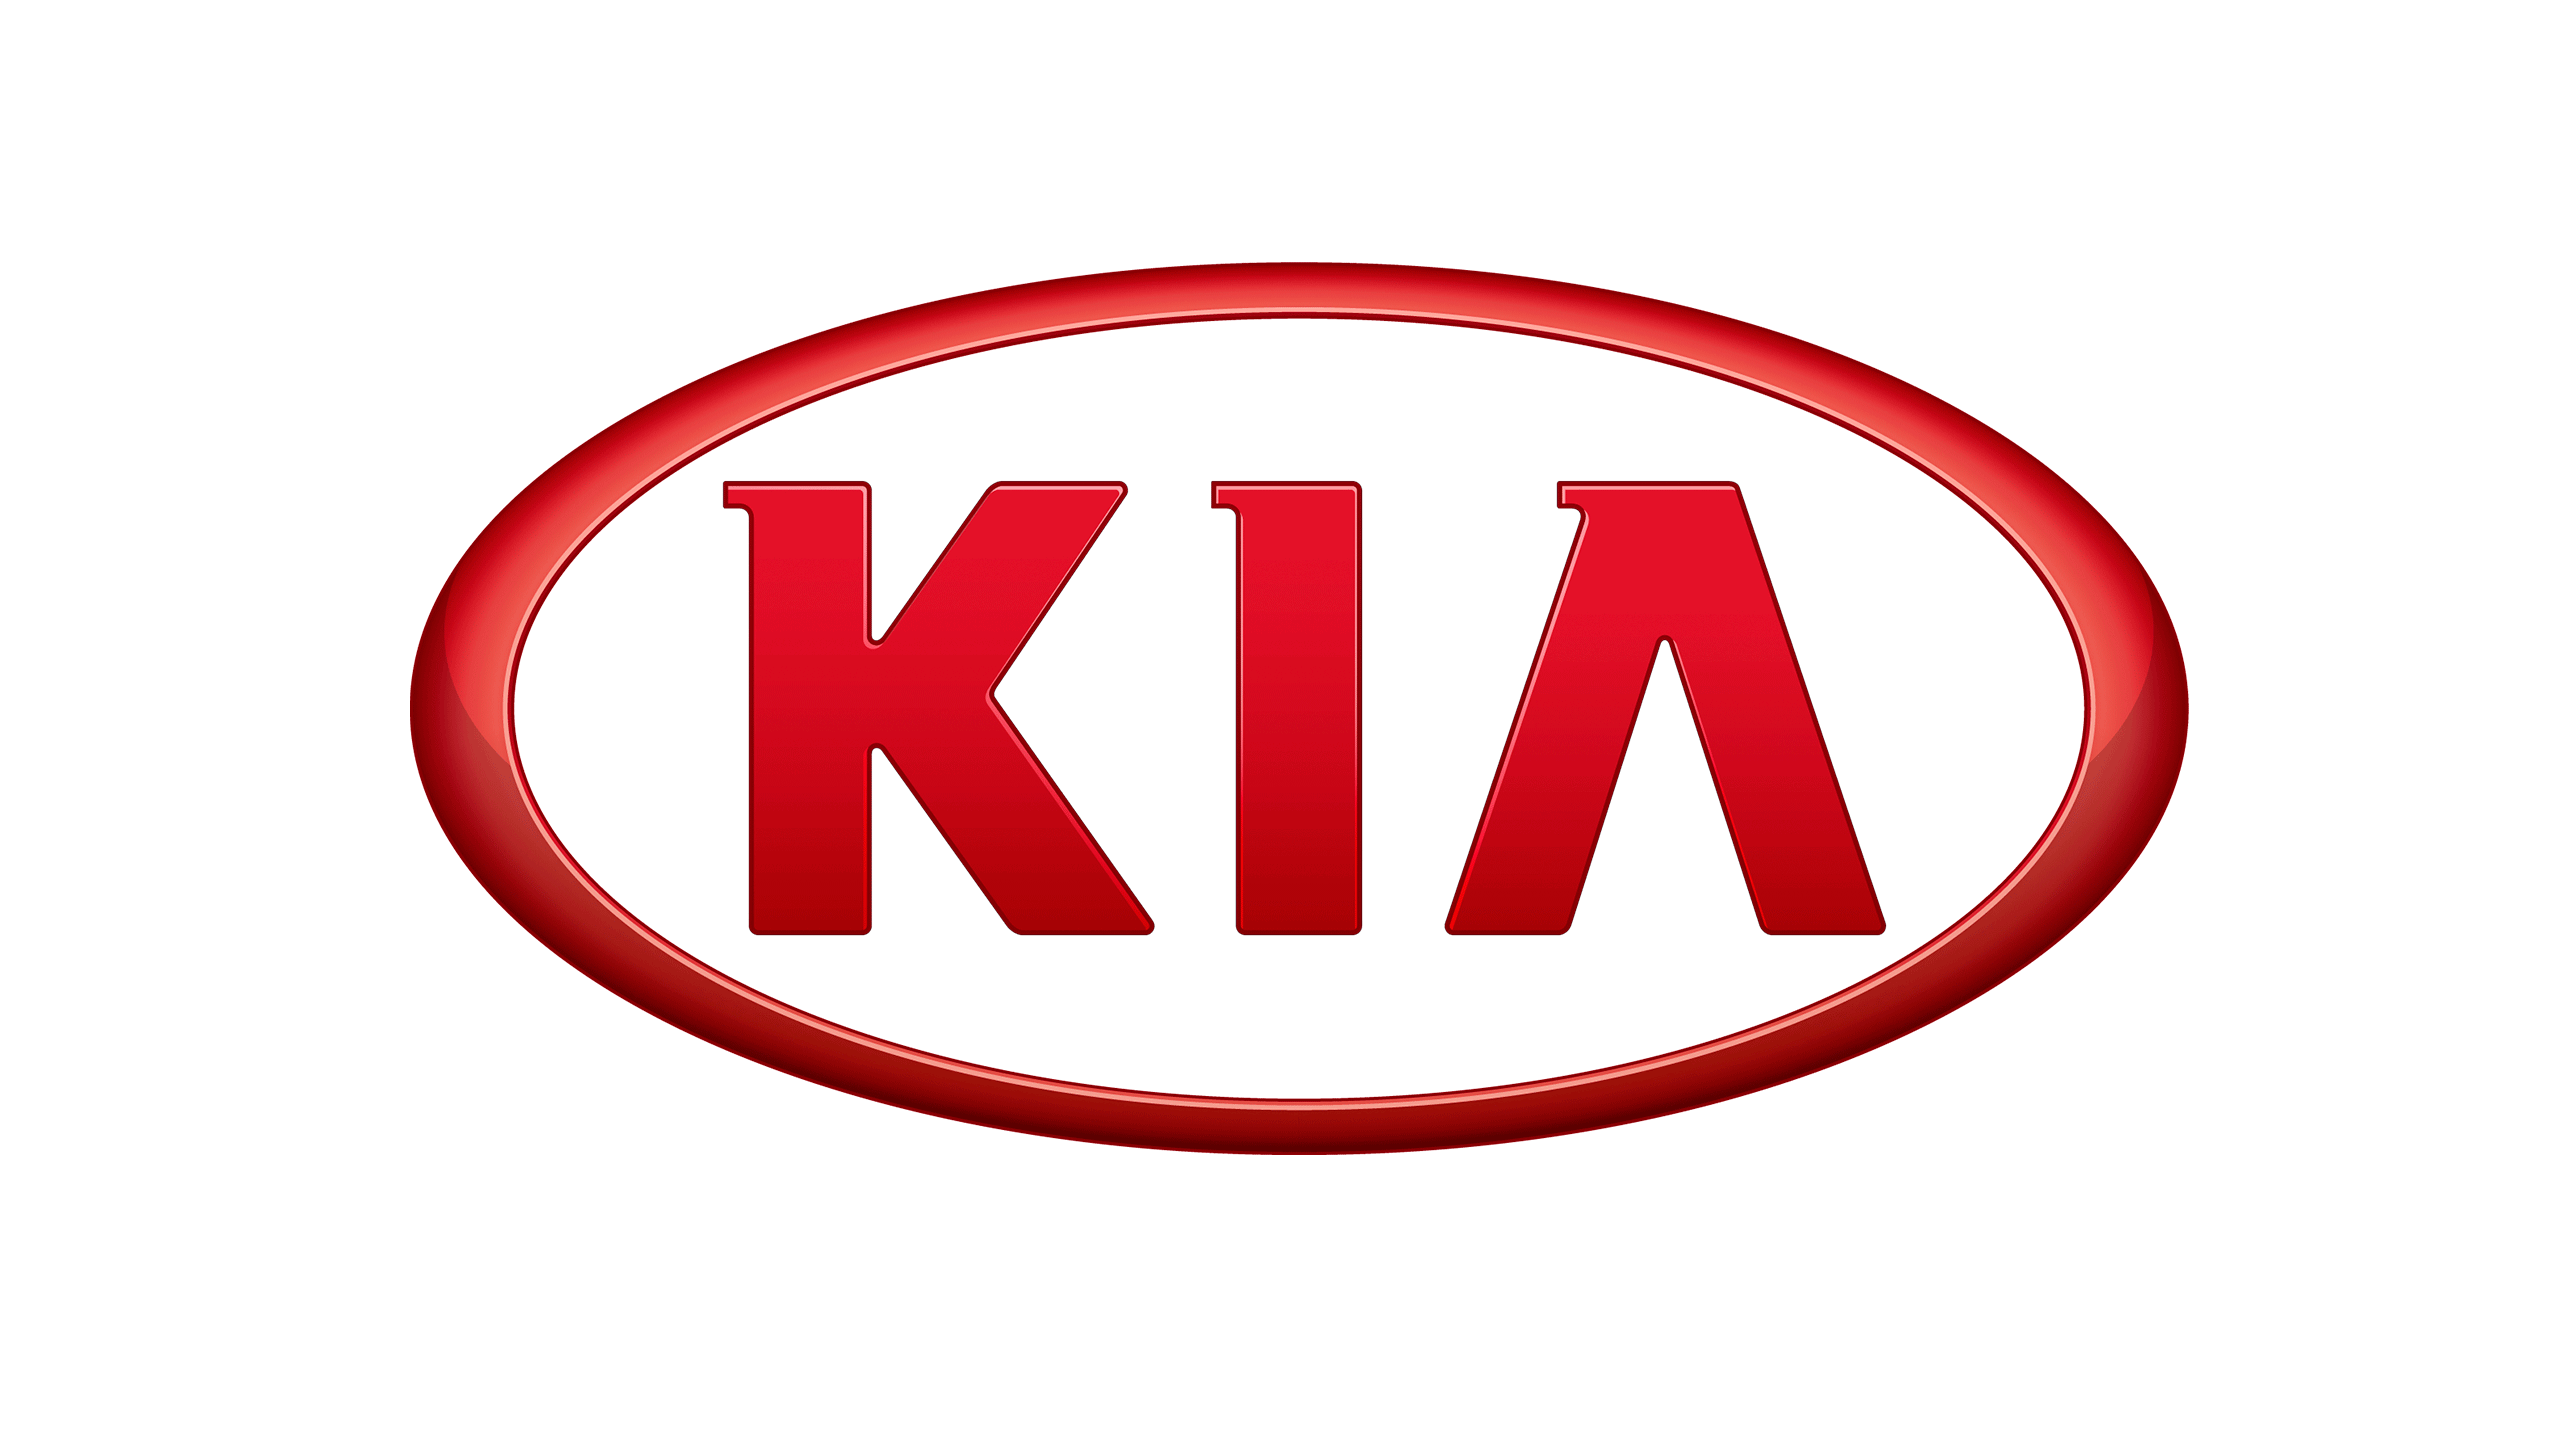 Kia motors logo.png